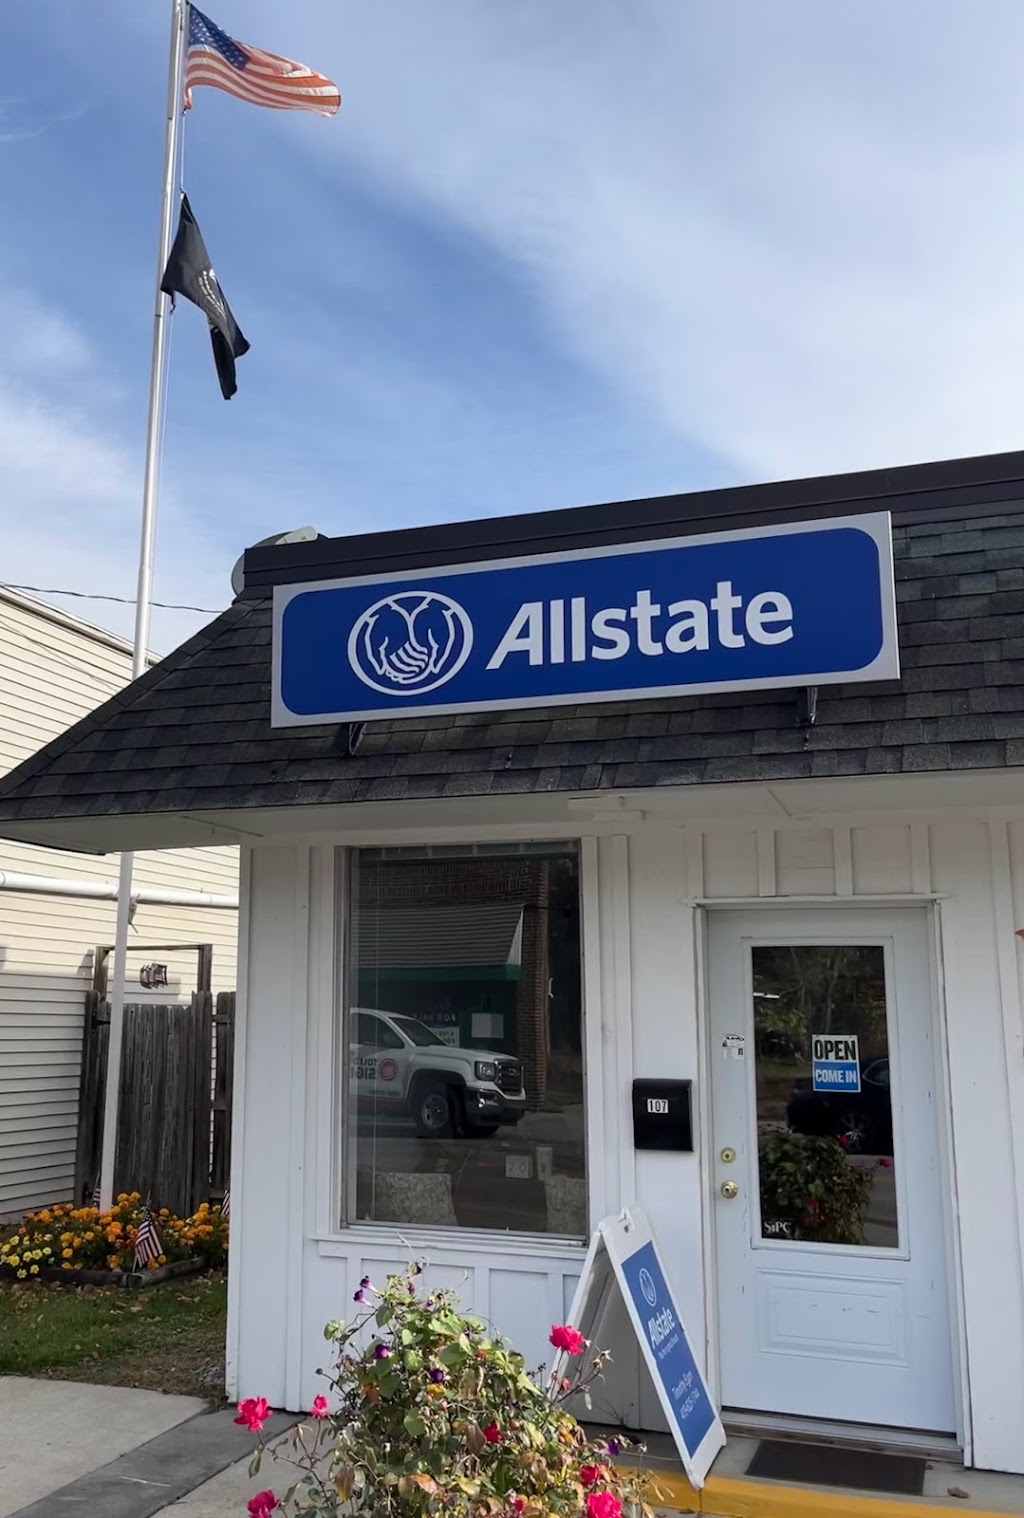 Timothy Egan: Allstate Insurance | 107 S Main St, Swanton, OH 43558, USA | Phone: (419) 825-1744